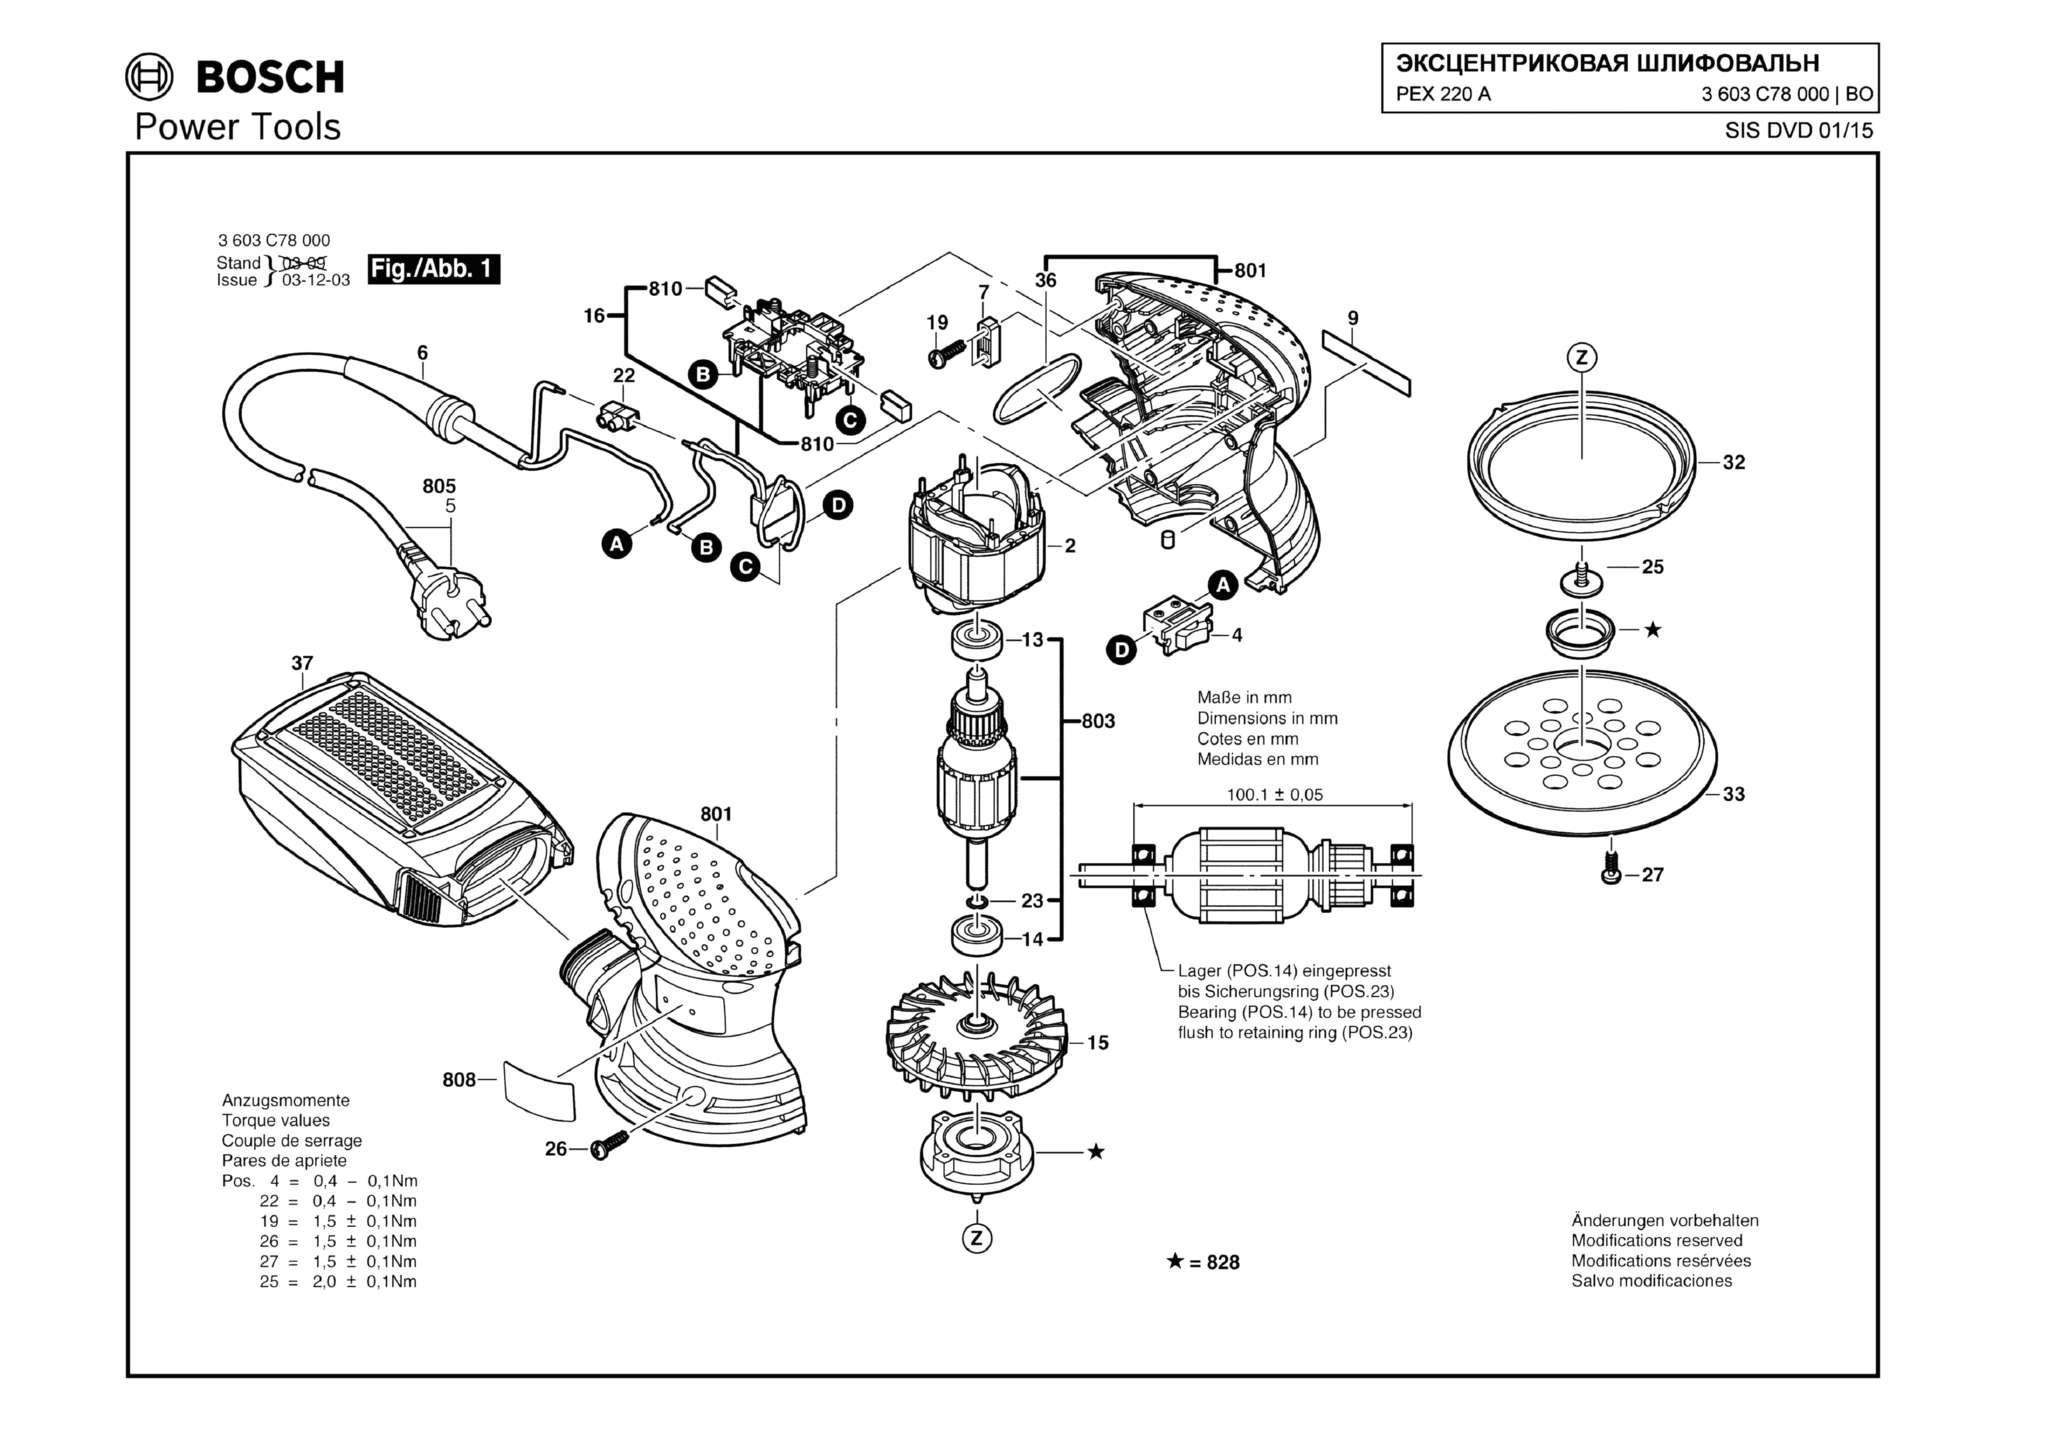 Запчасти, схема и деталировка Bosch PEX 220 A (ТИП 3603C78000)